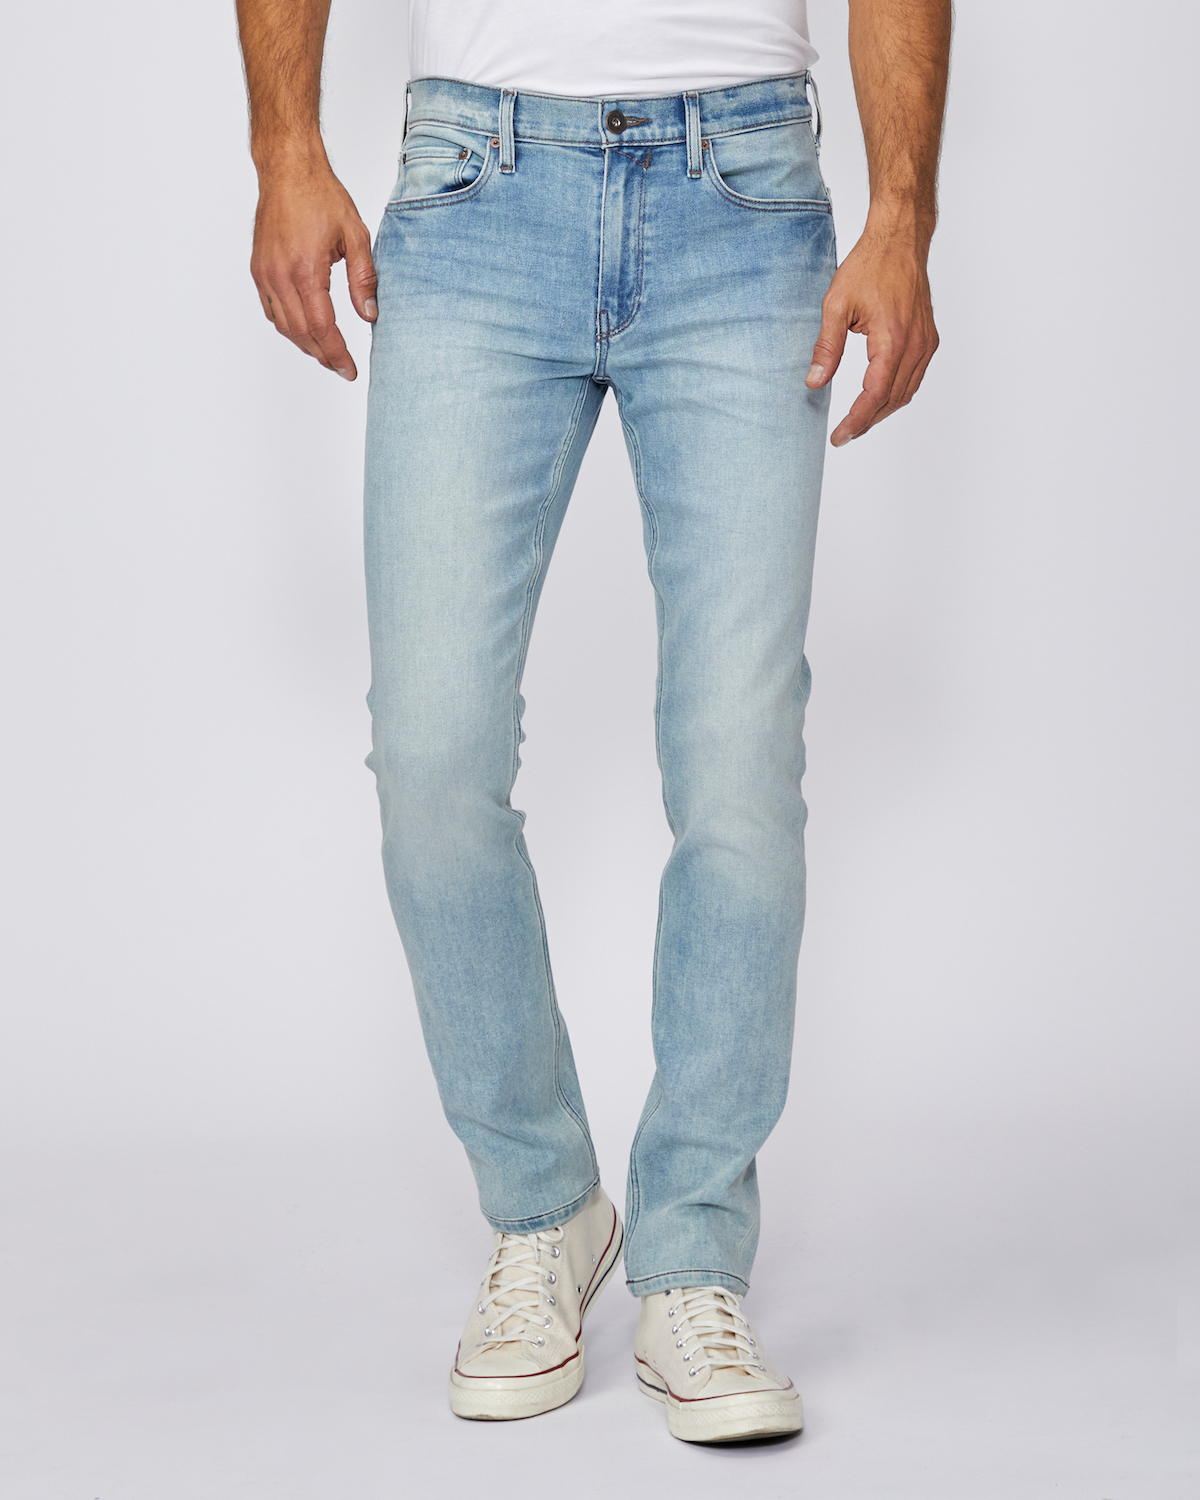 PAIGE® | Premium Denim Jeans and Apparel